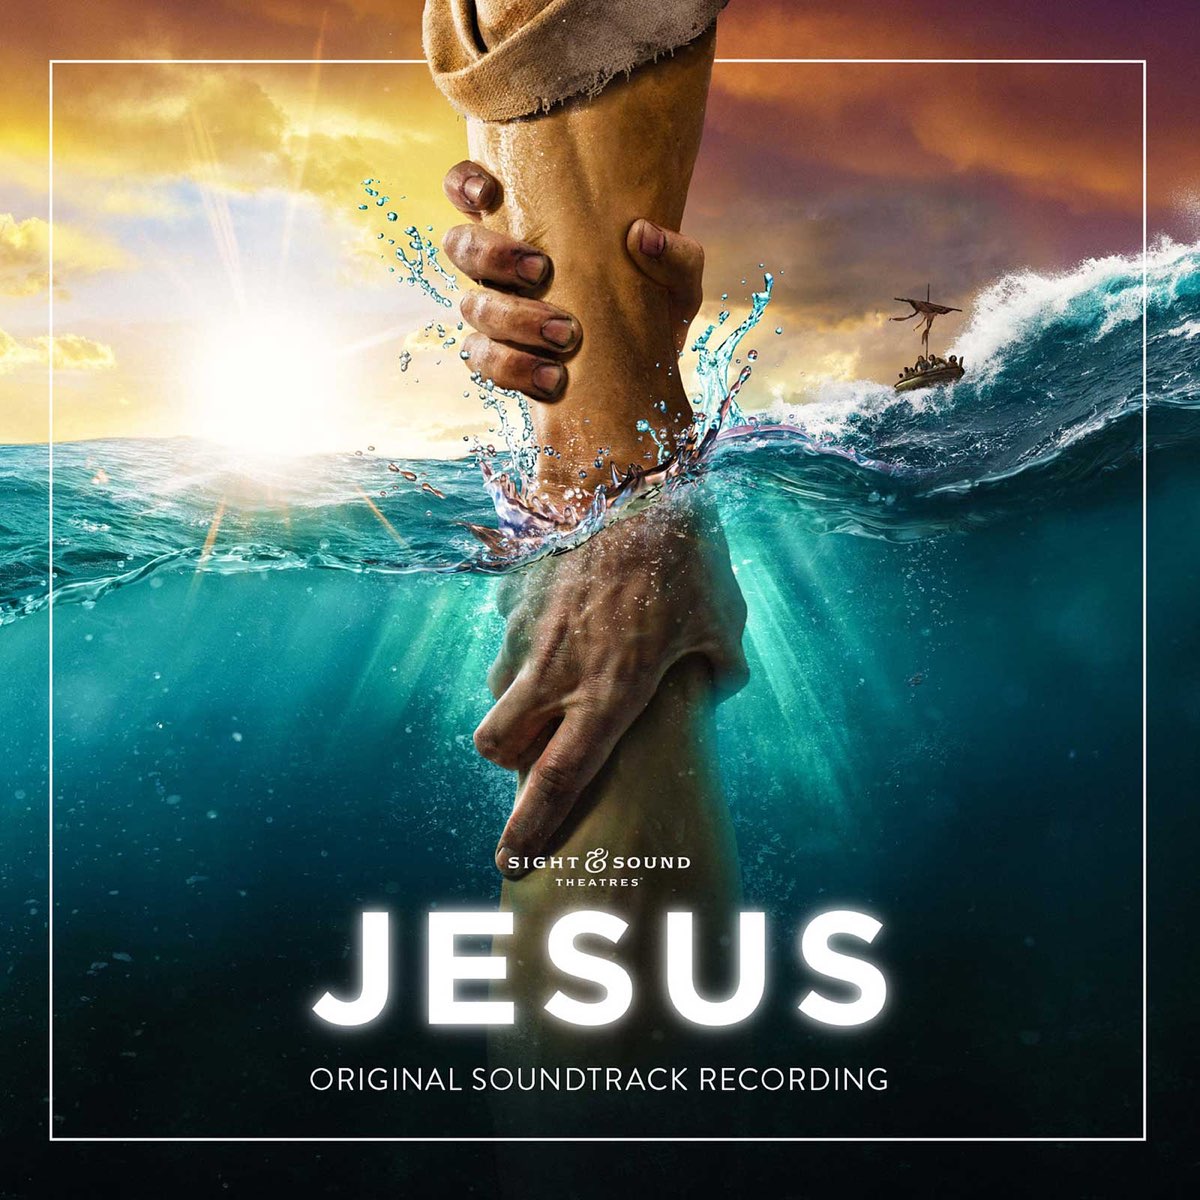 ‎jesus Original Soundtrack Recording Album By Sight And Sound Theatres Apple Music